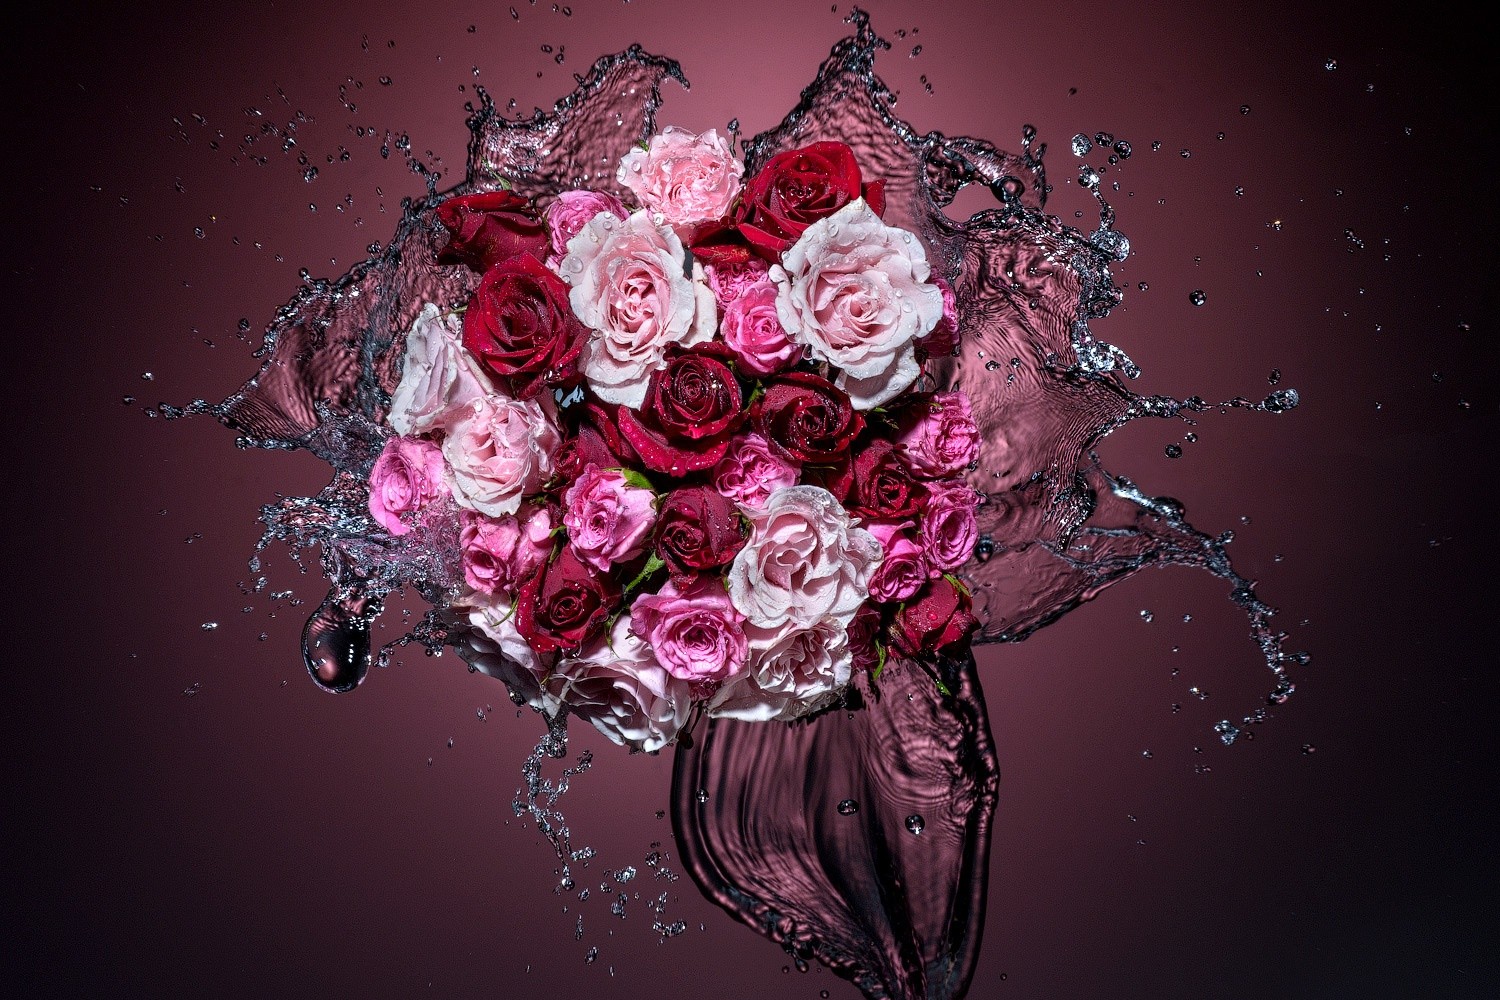 Splashing Roses: Behind the Scenes of a High-Speed Liquid Shot